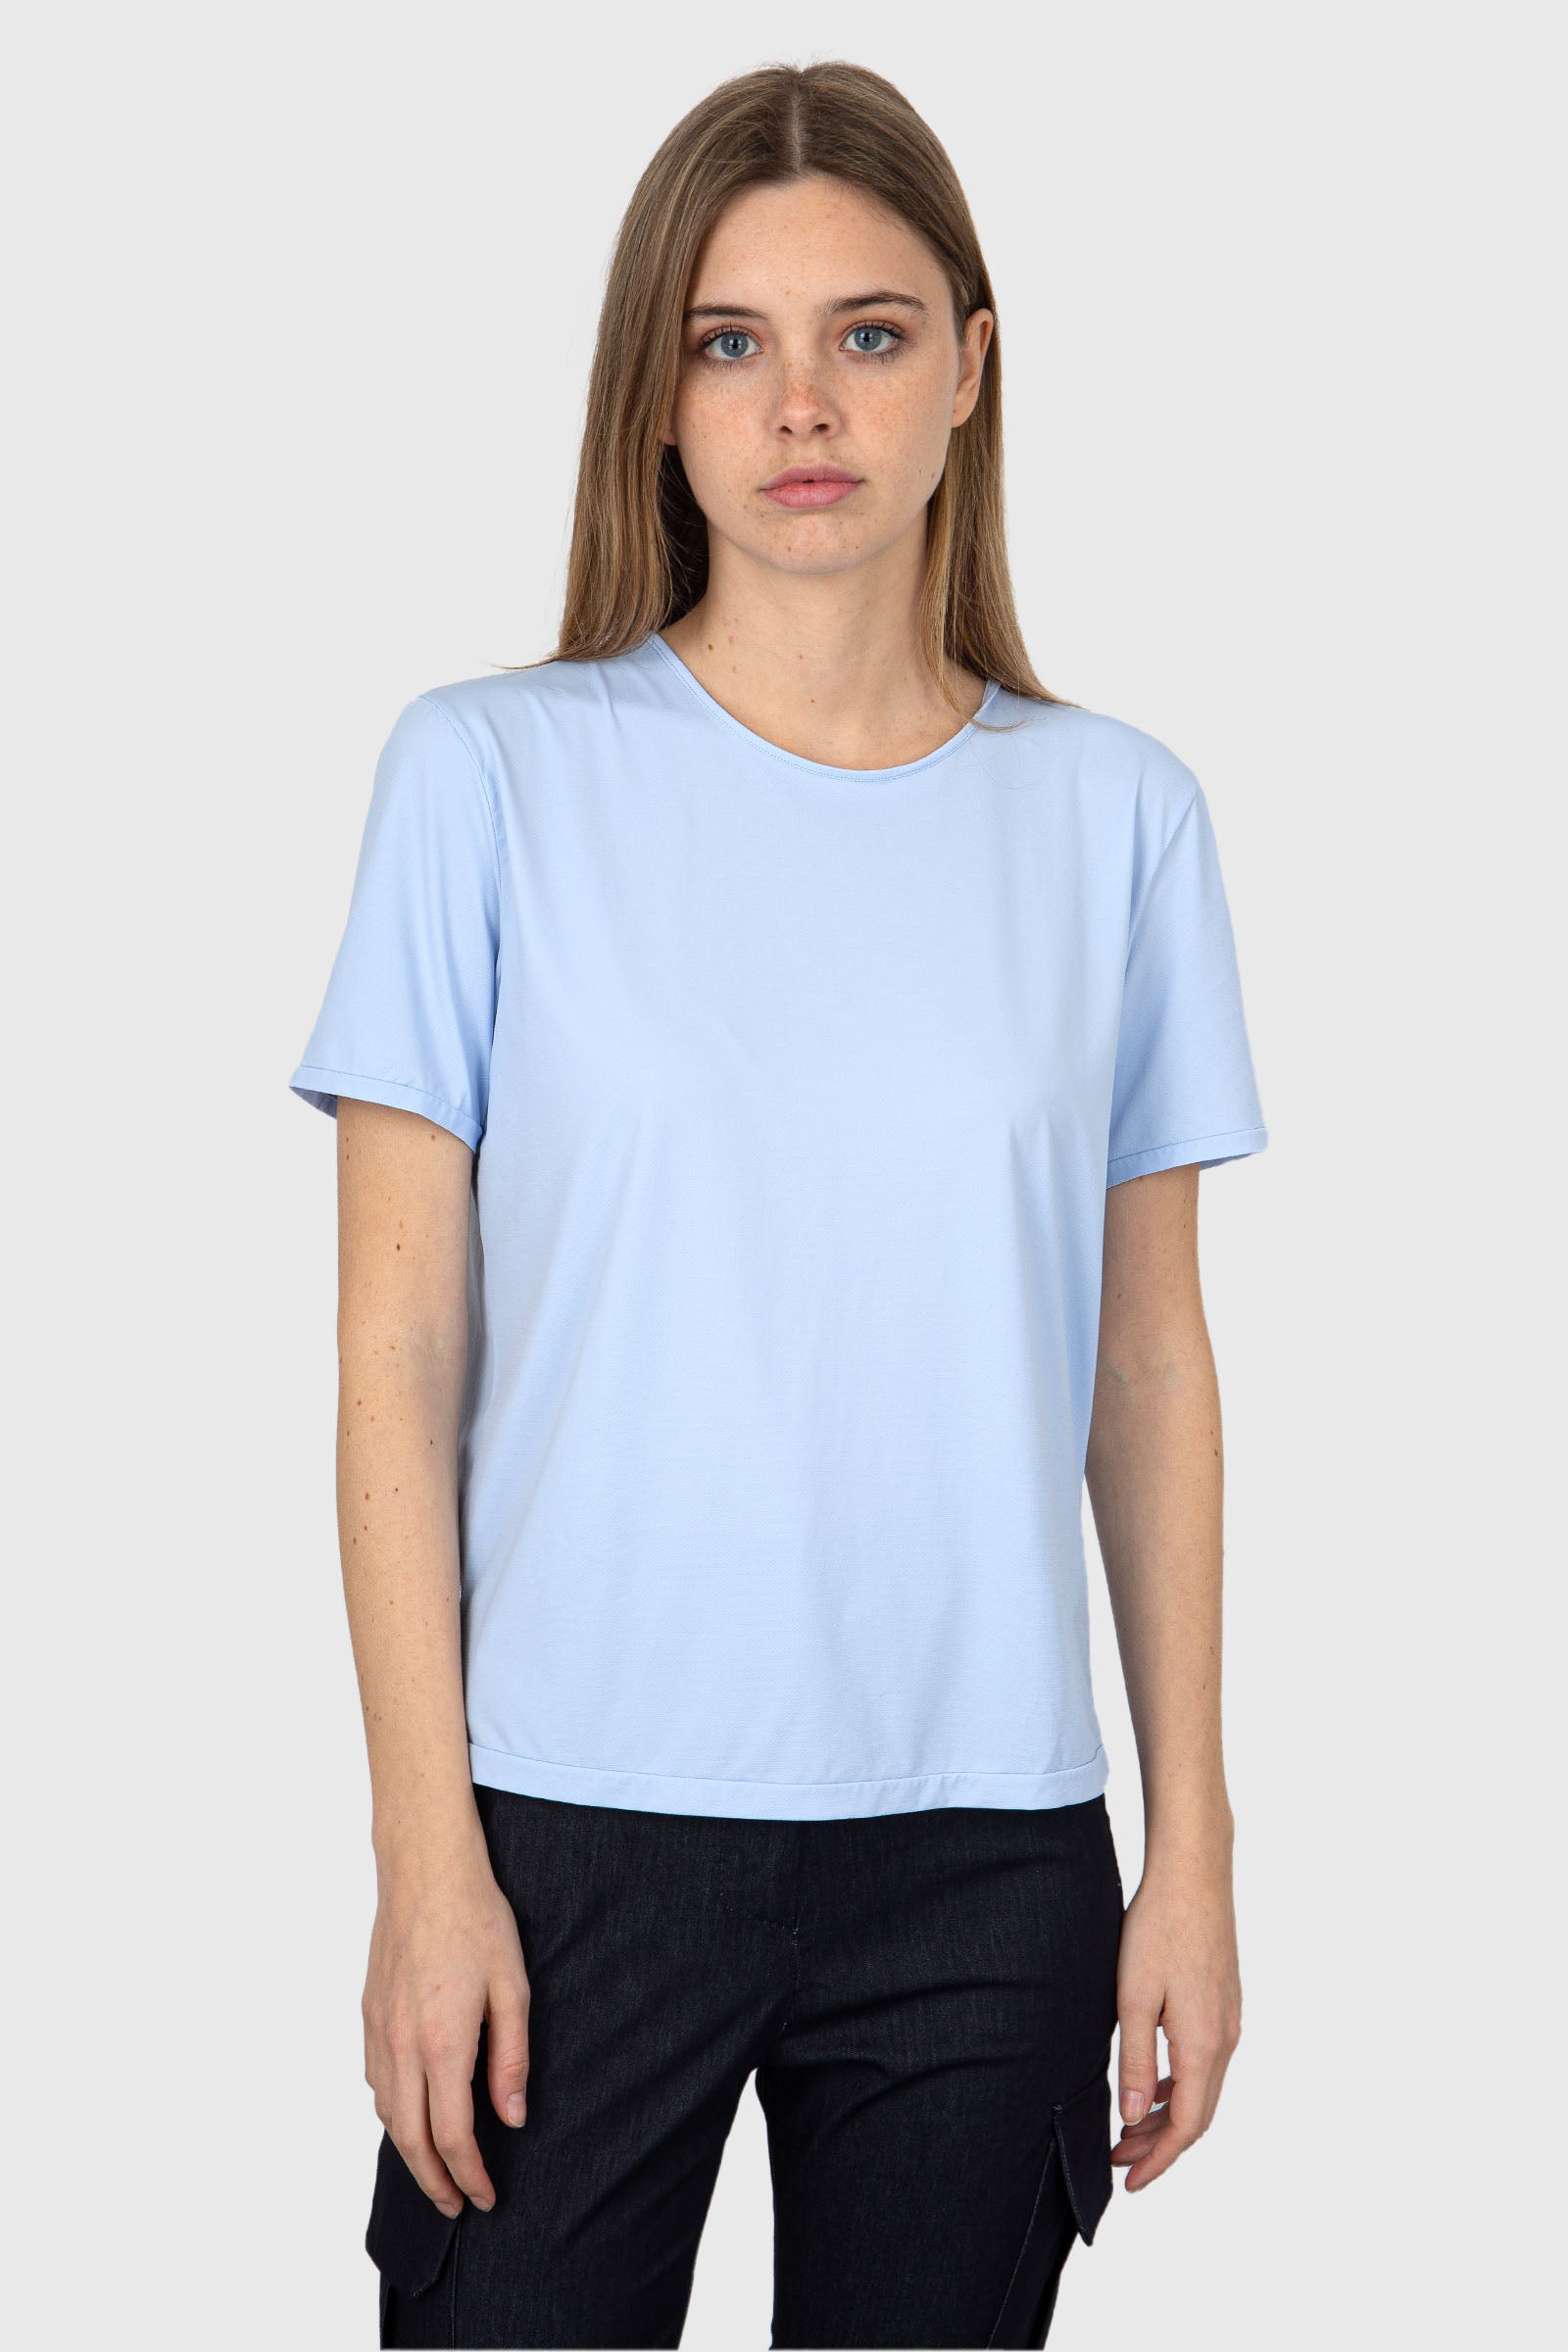 RRD Synthetic Oxford Light Blue T-Shirt - 1